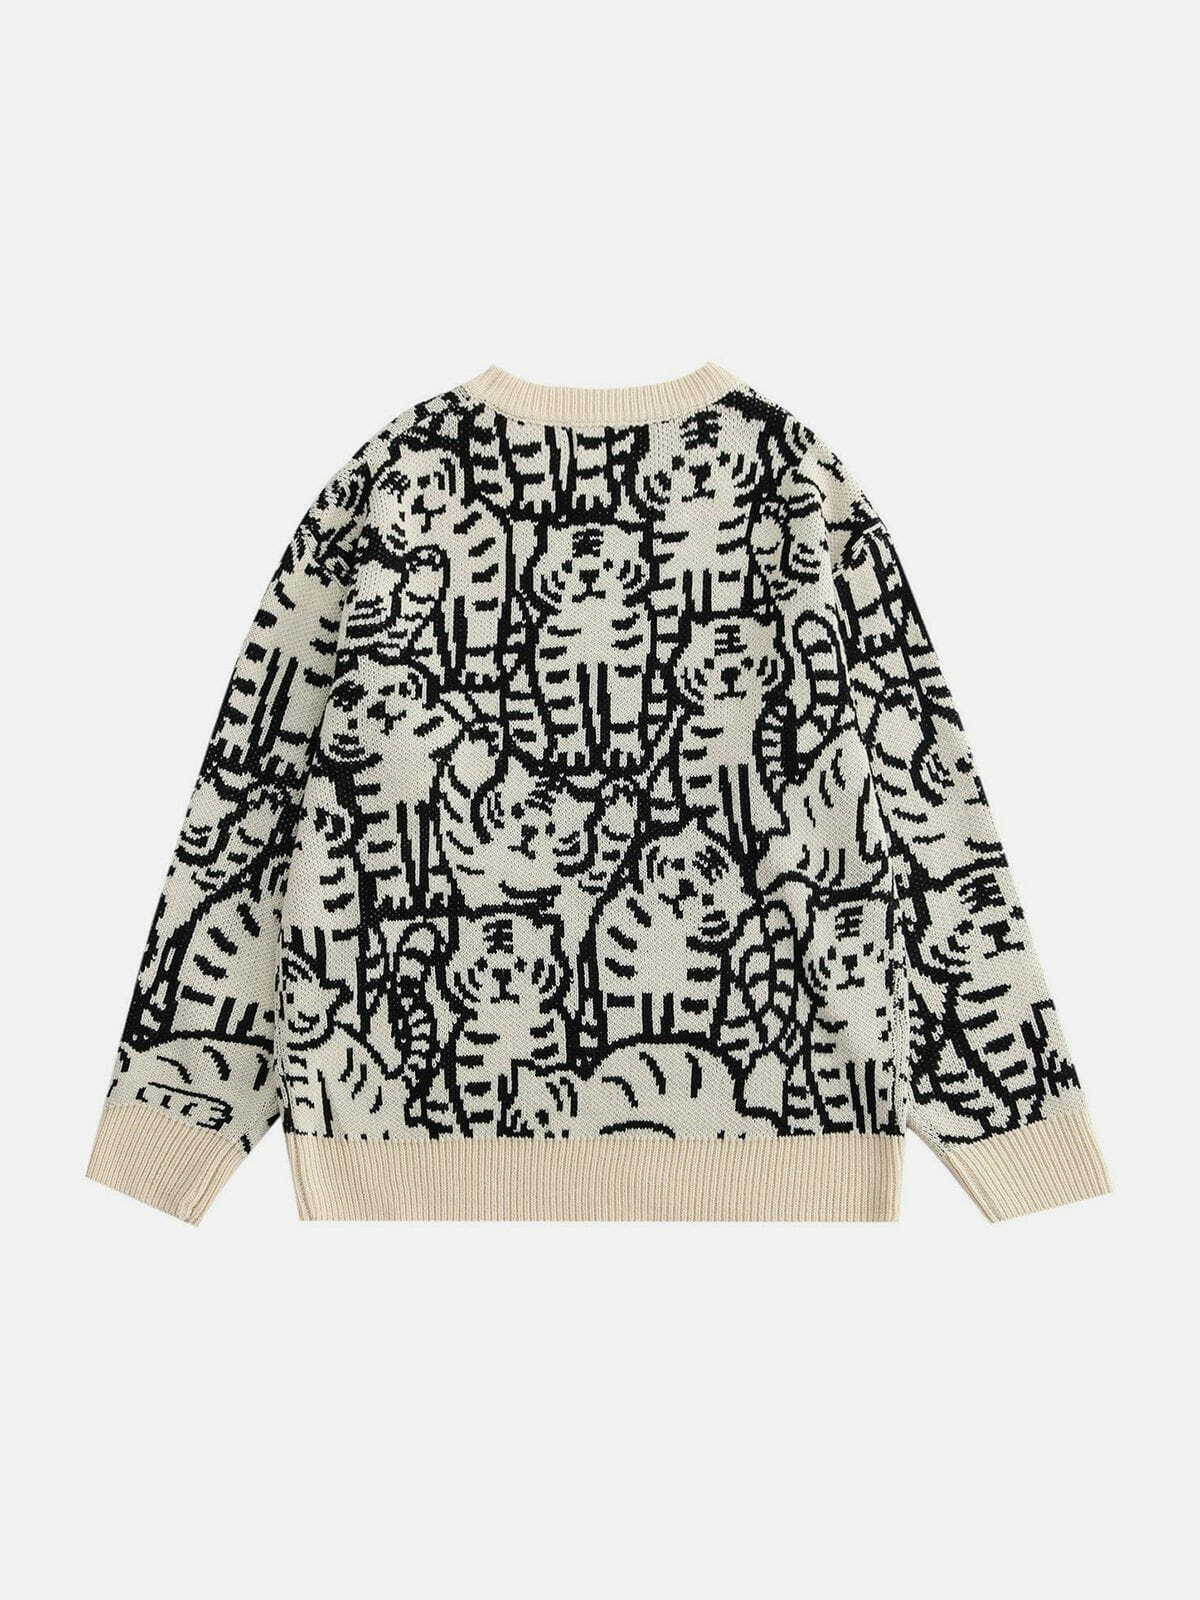 tiger print knit sweater edgy y2k fashion icon 1420